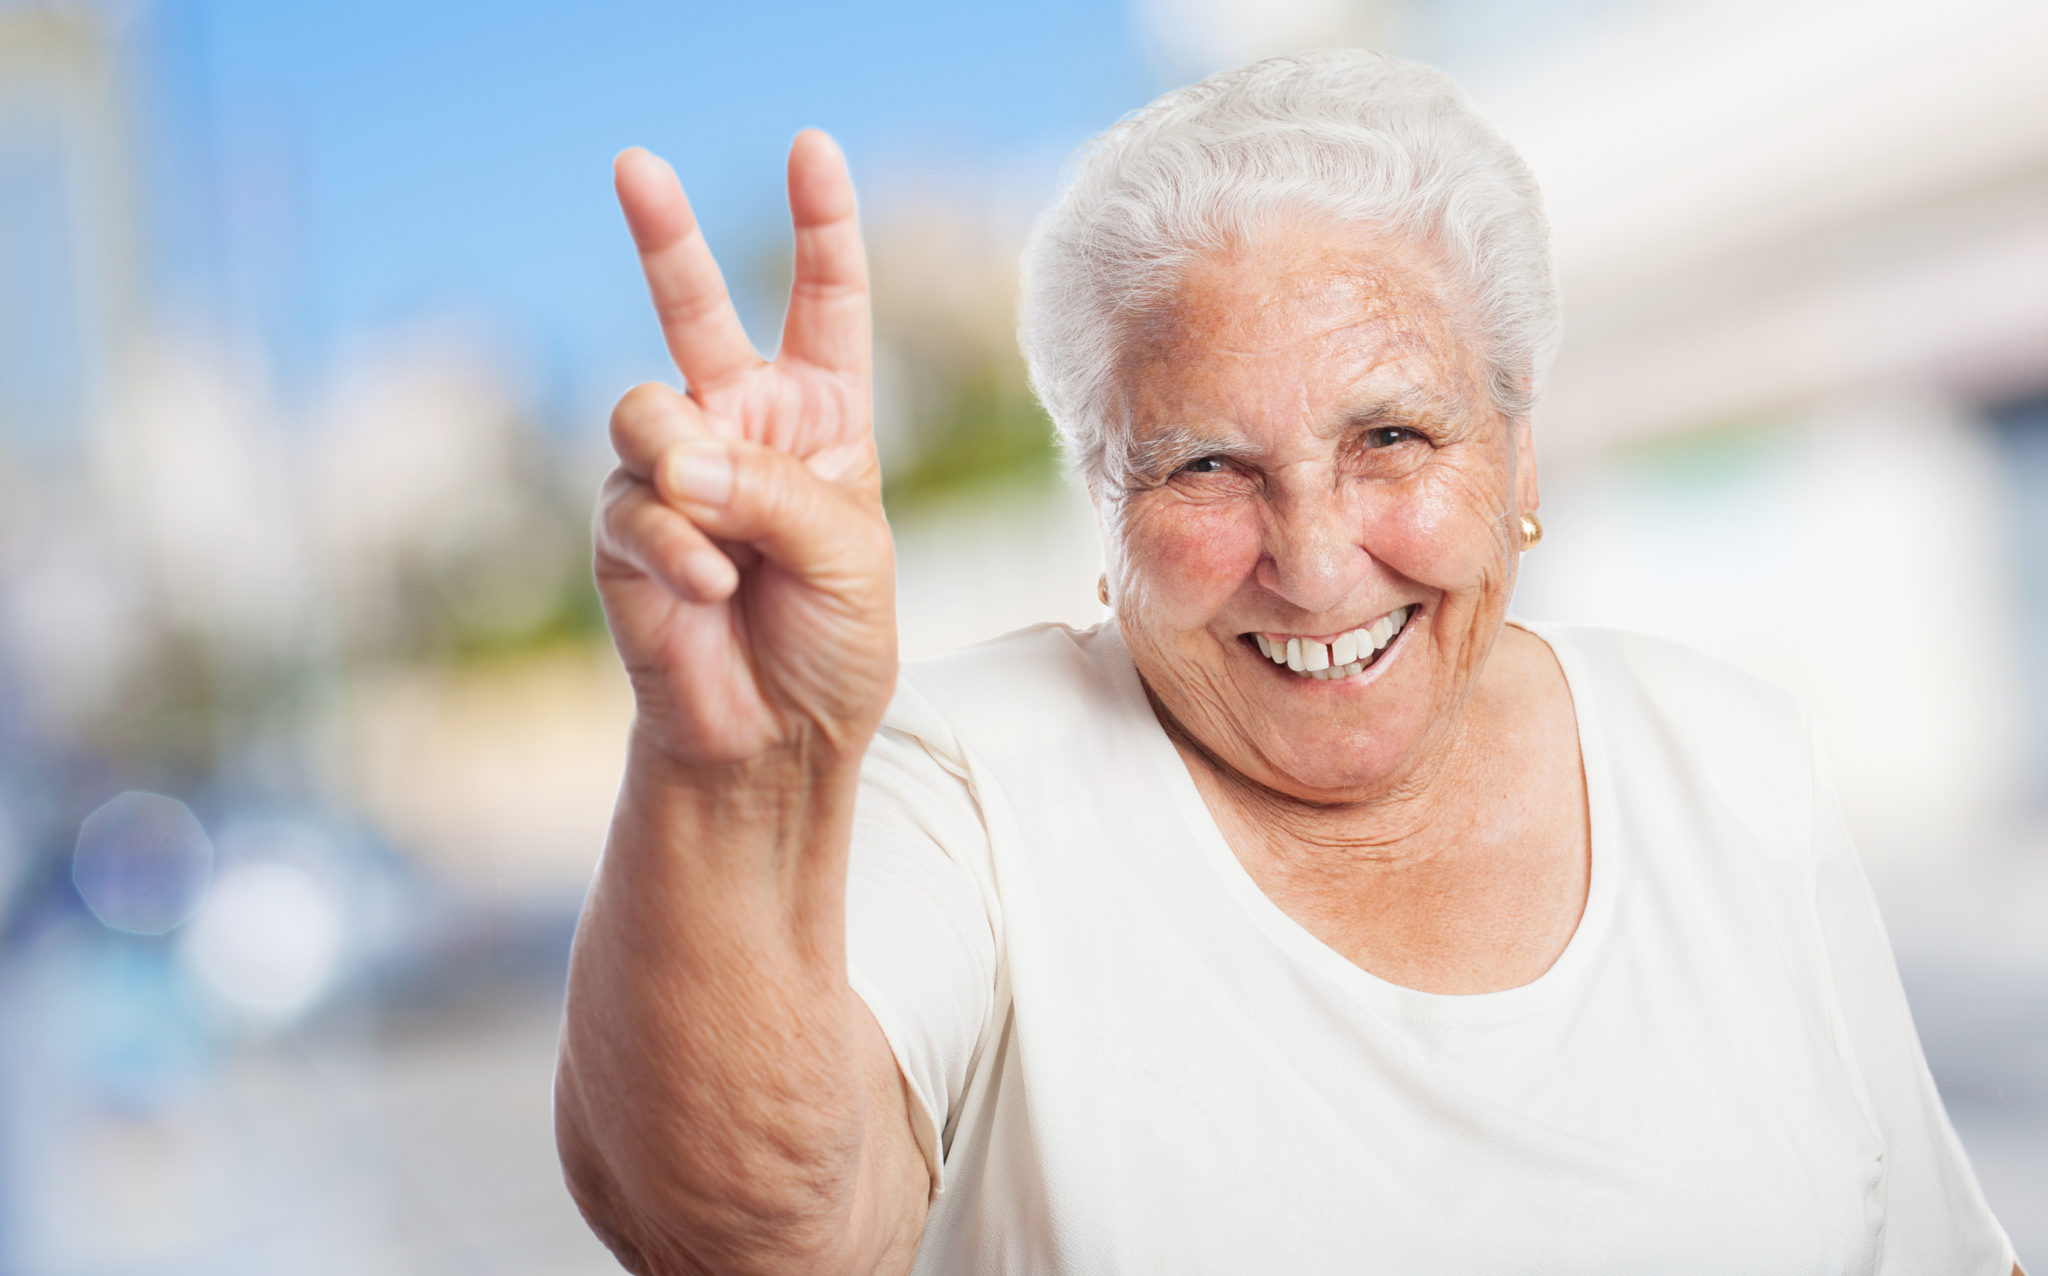 Grandma with hard nipples finger